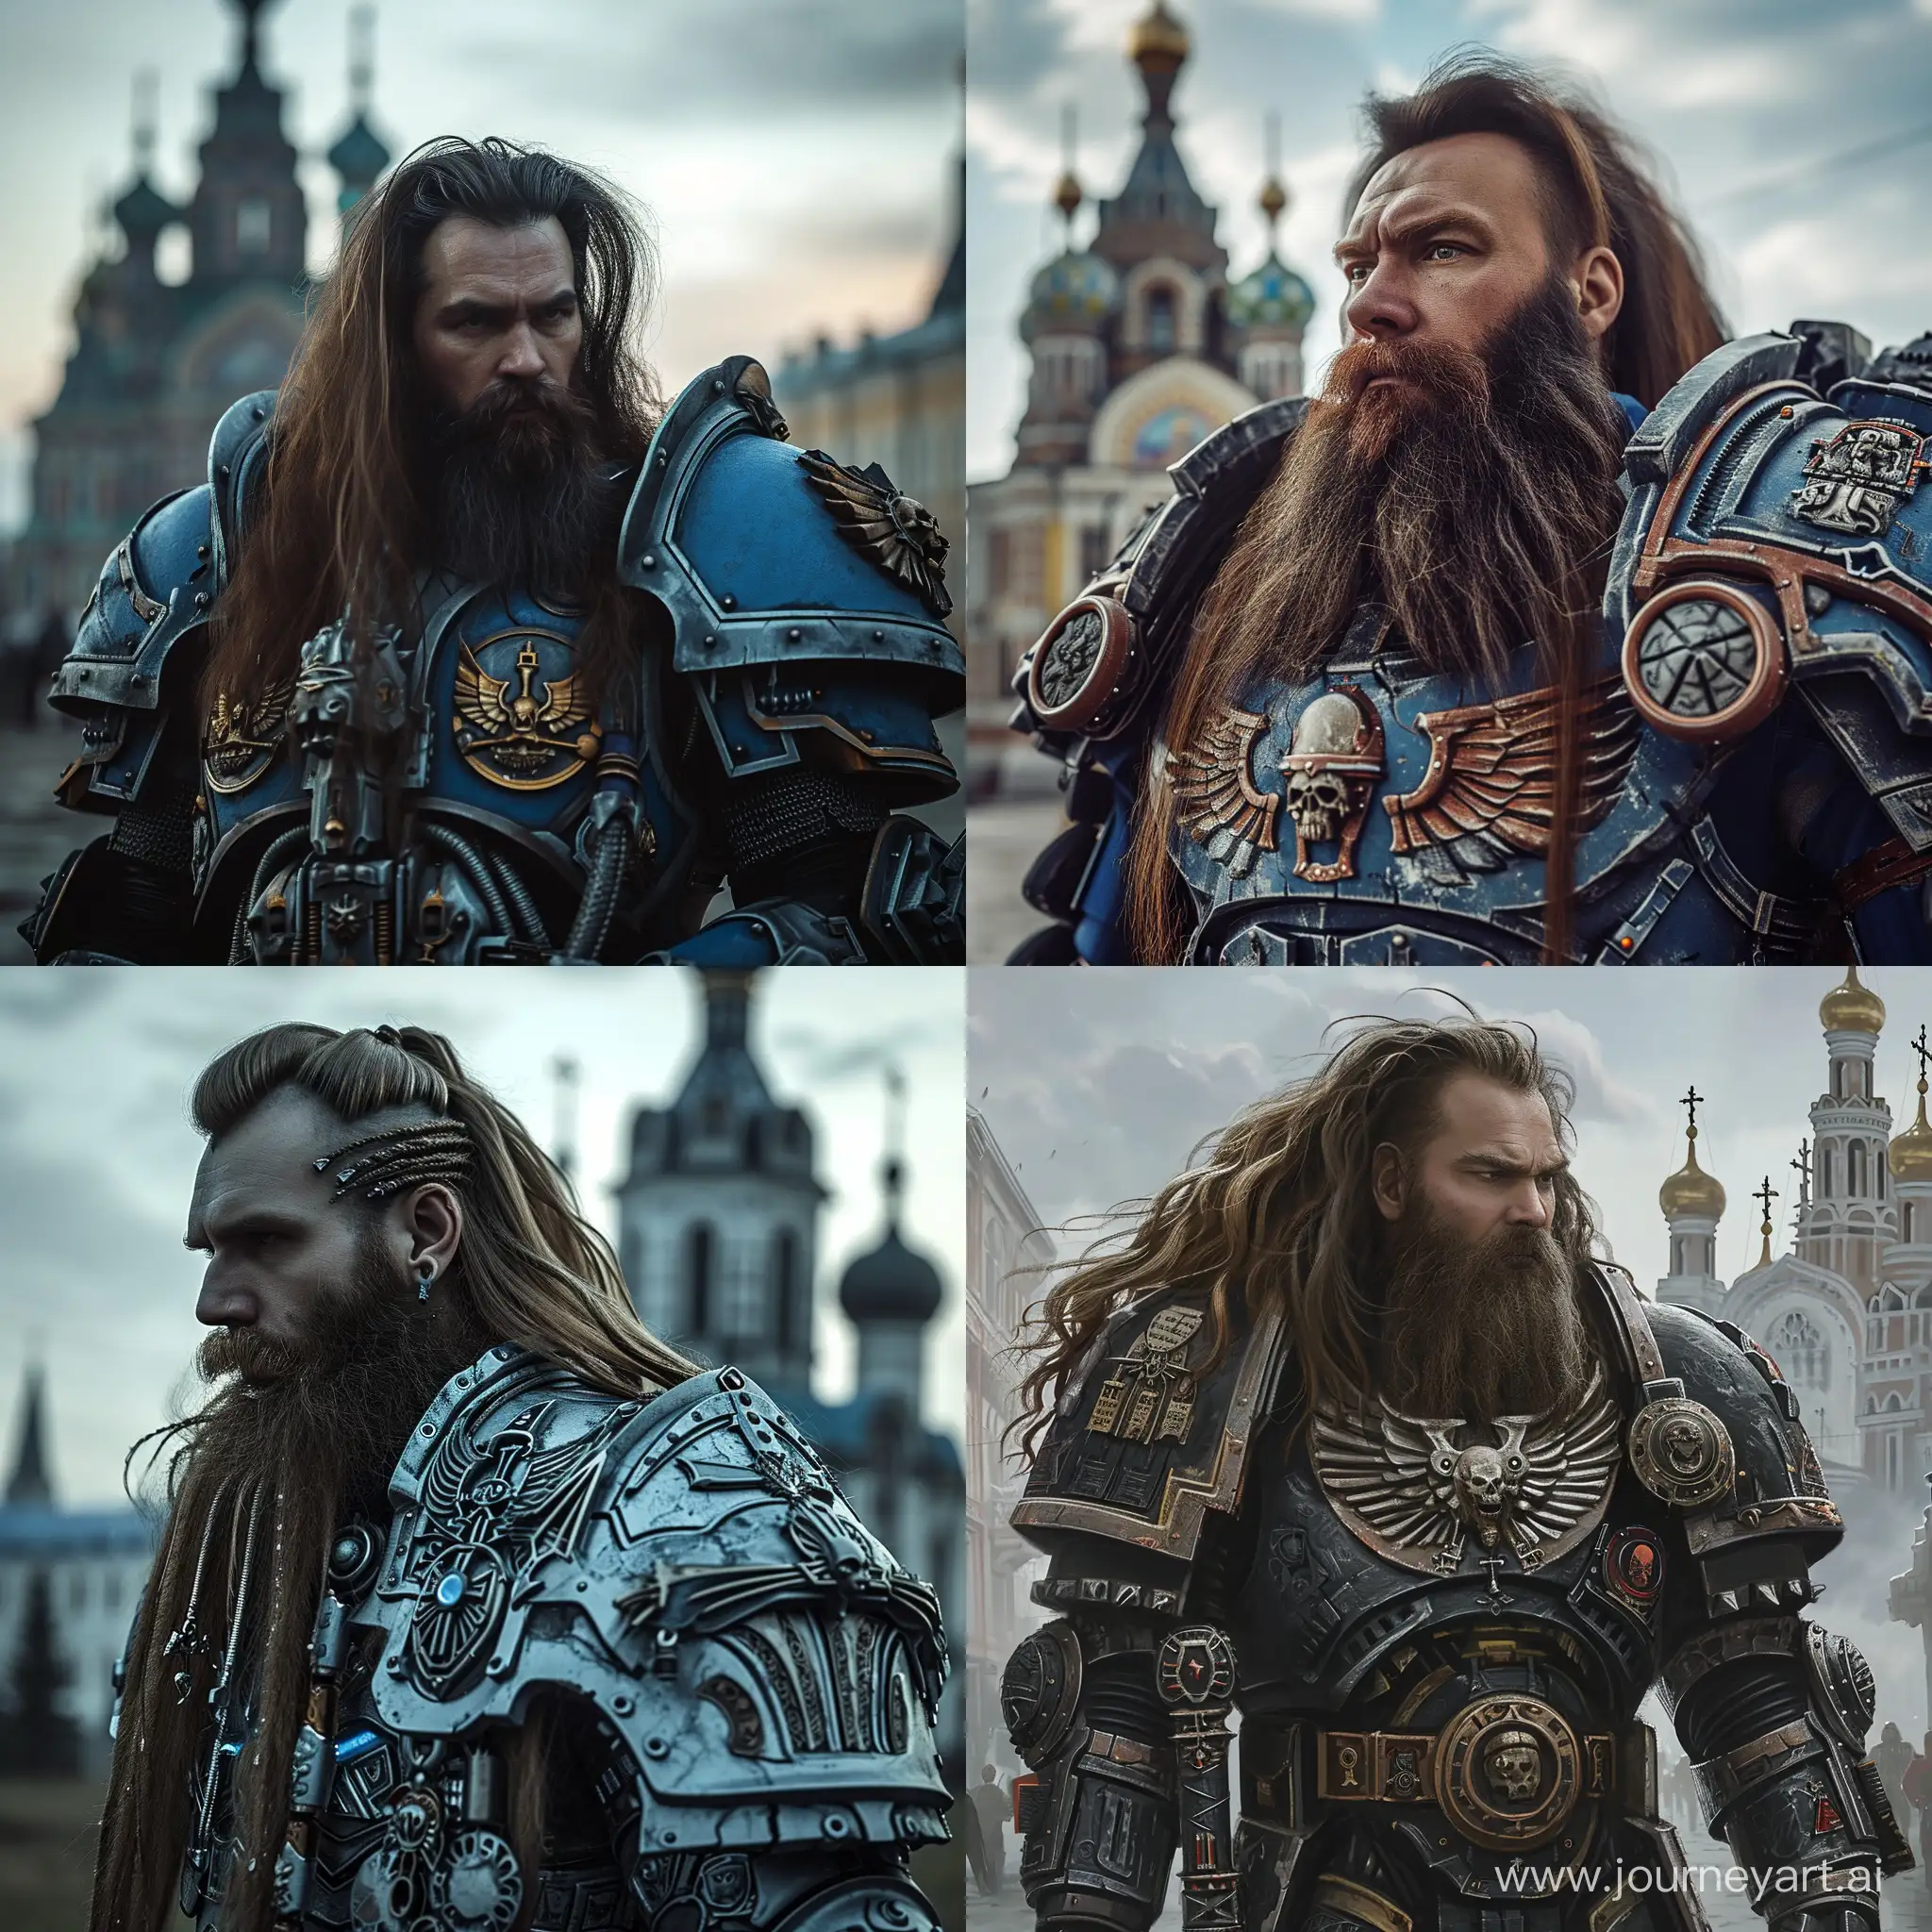 Futuristic-Russian-Warrior-with-Ultramarine-Armor-and-Beard